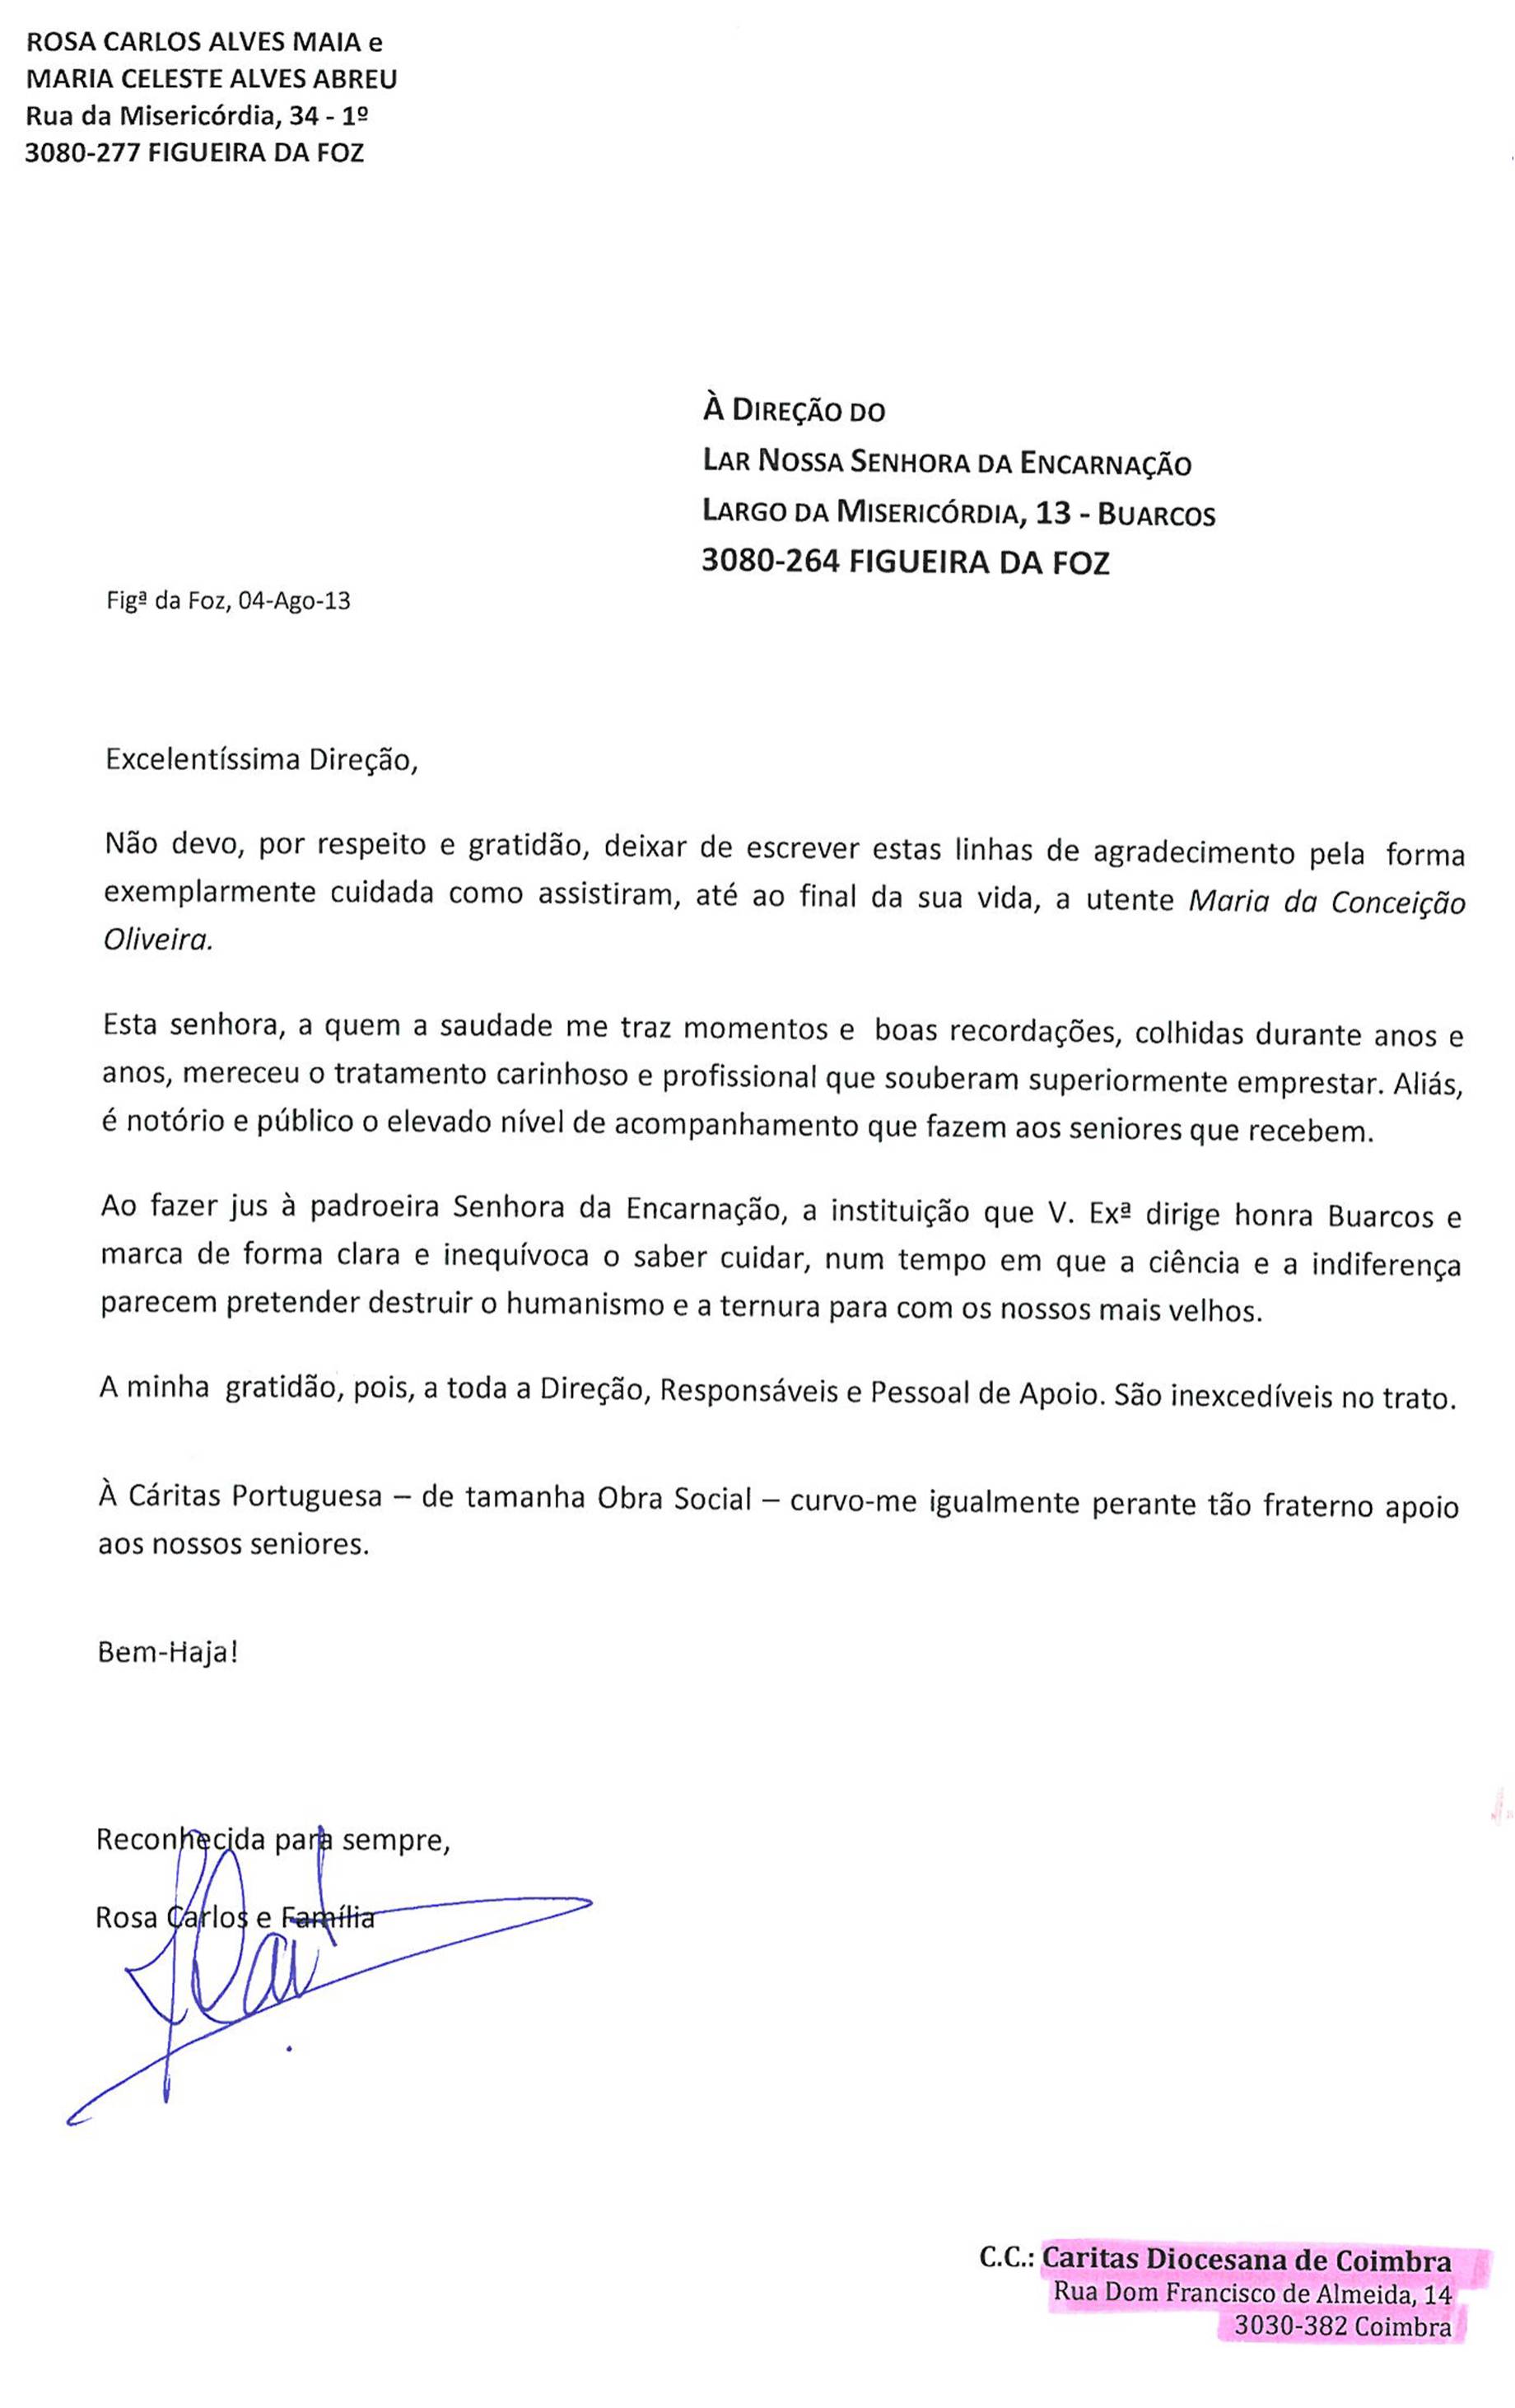 Agradecimento ao Lar de Buarcos - Caritas Diocesana de Coimbra